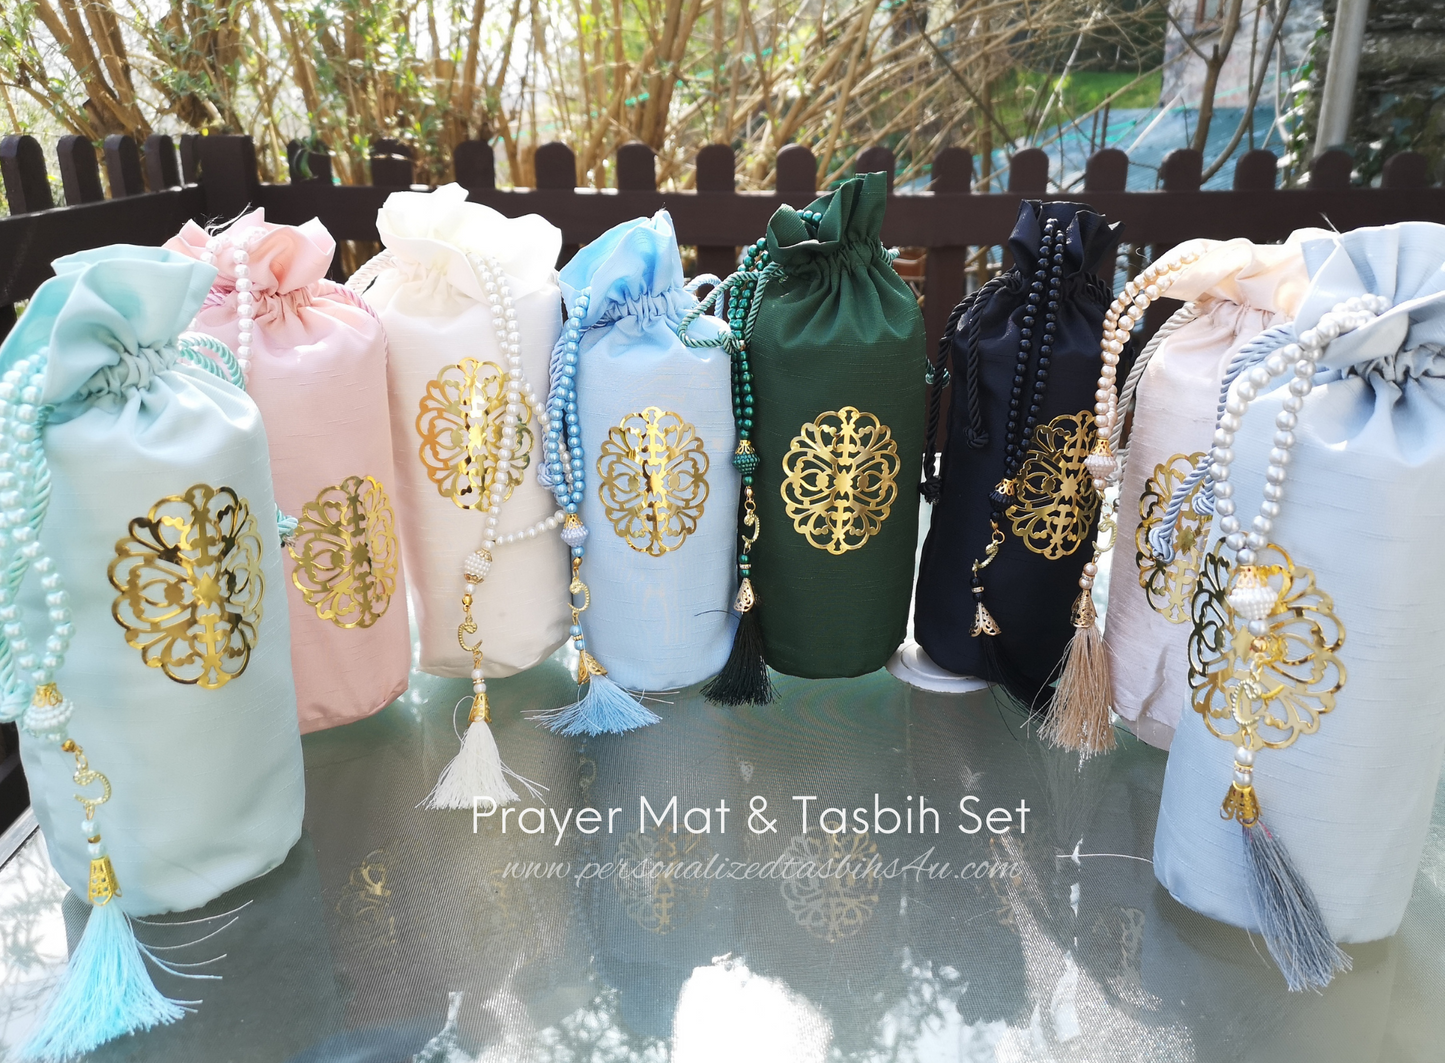 Prayer Mat & Tasbih Set Pouch - [LAST FEW REMAINING]